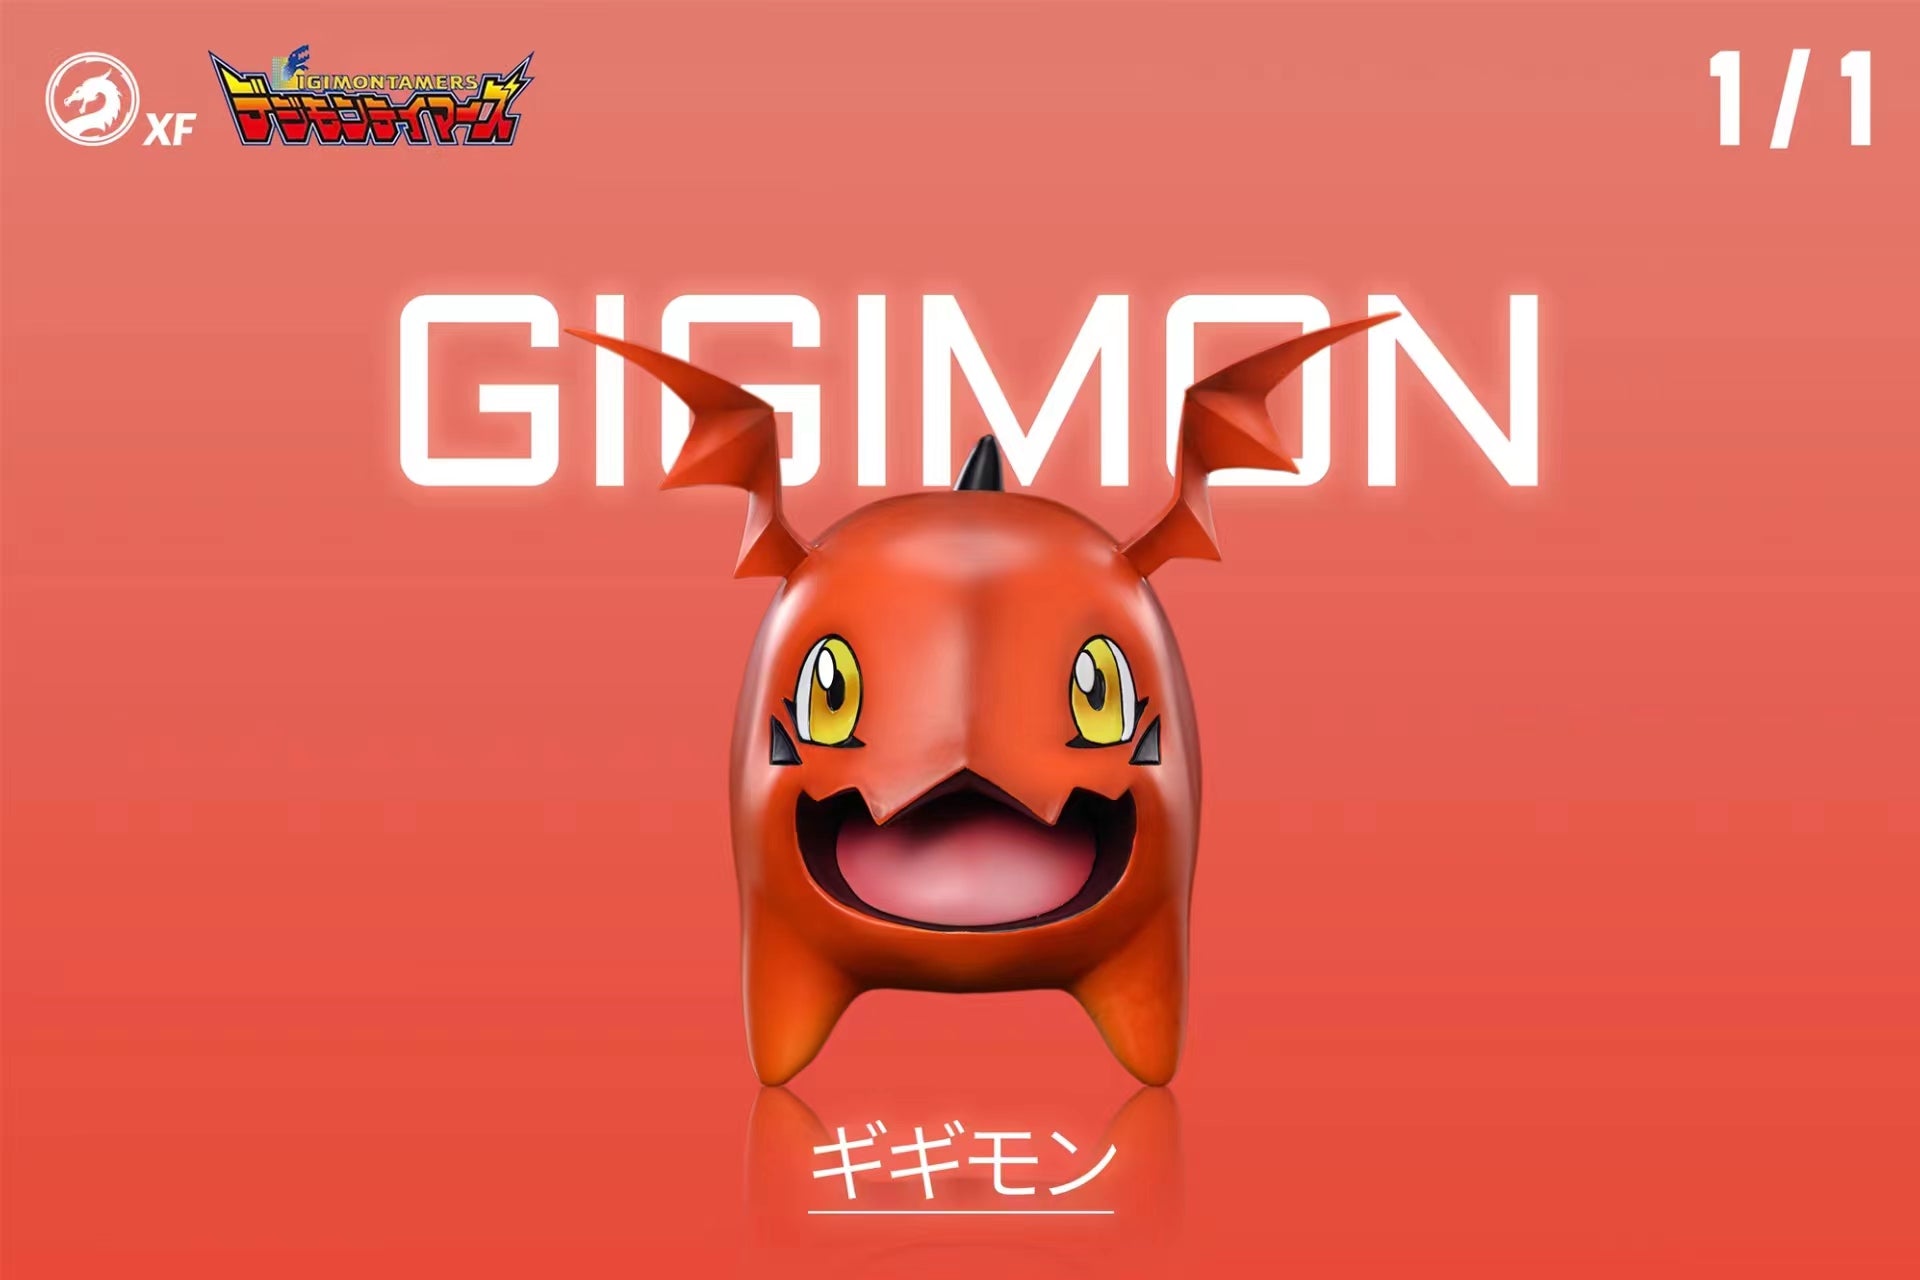 XF Studio - Gigimon / Yarmon / Culumon